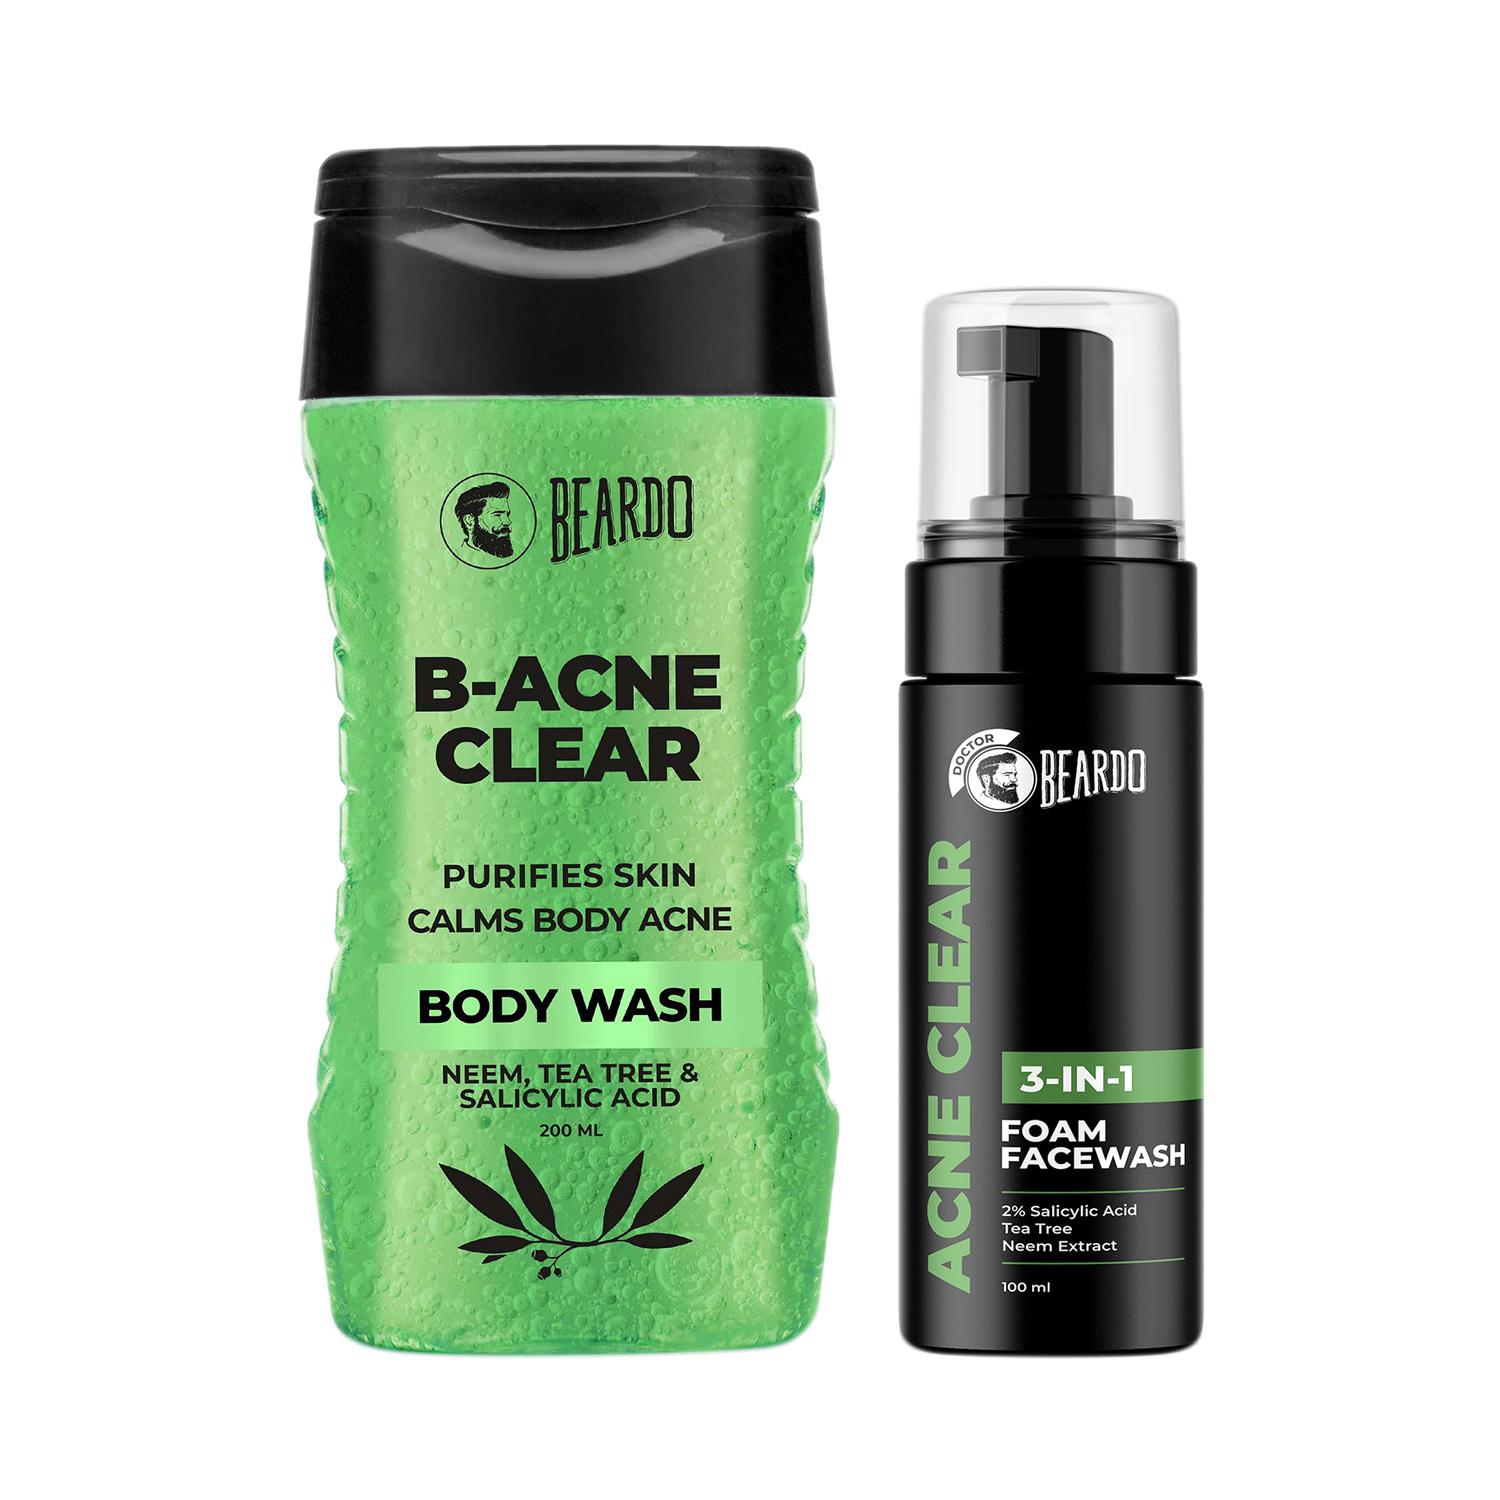 Beardo | Beardo B-acne Clear Body Wash, Acne Clear Foam Face wash (Set of 2) Combo